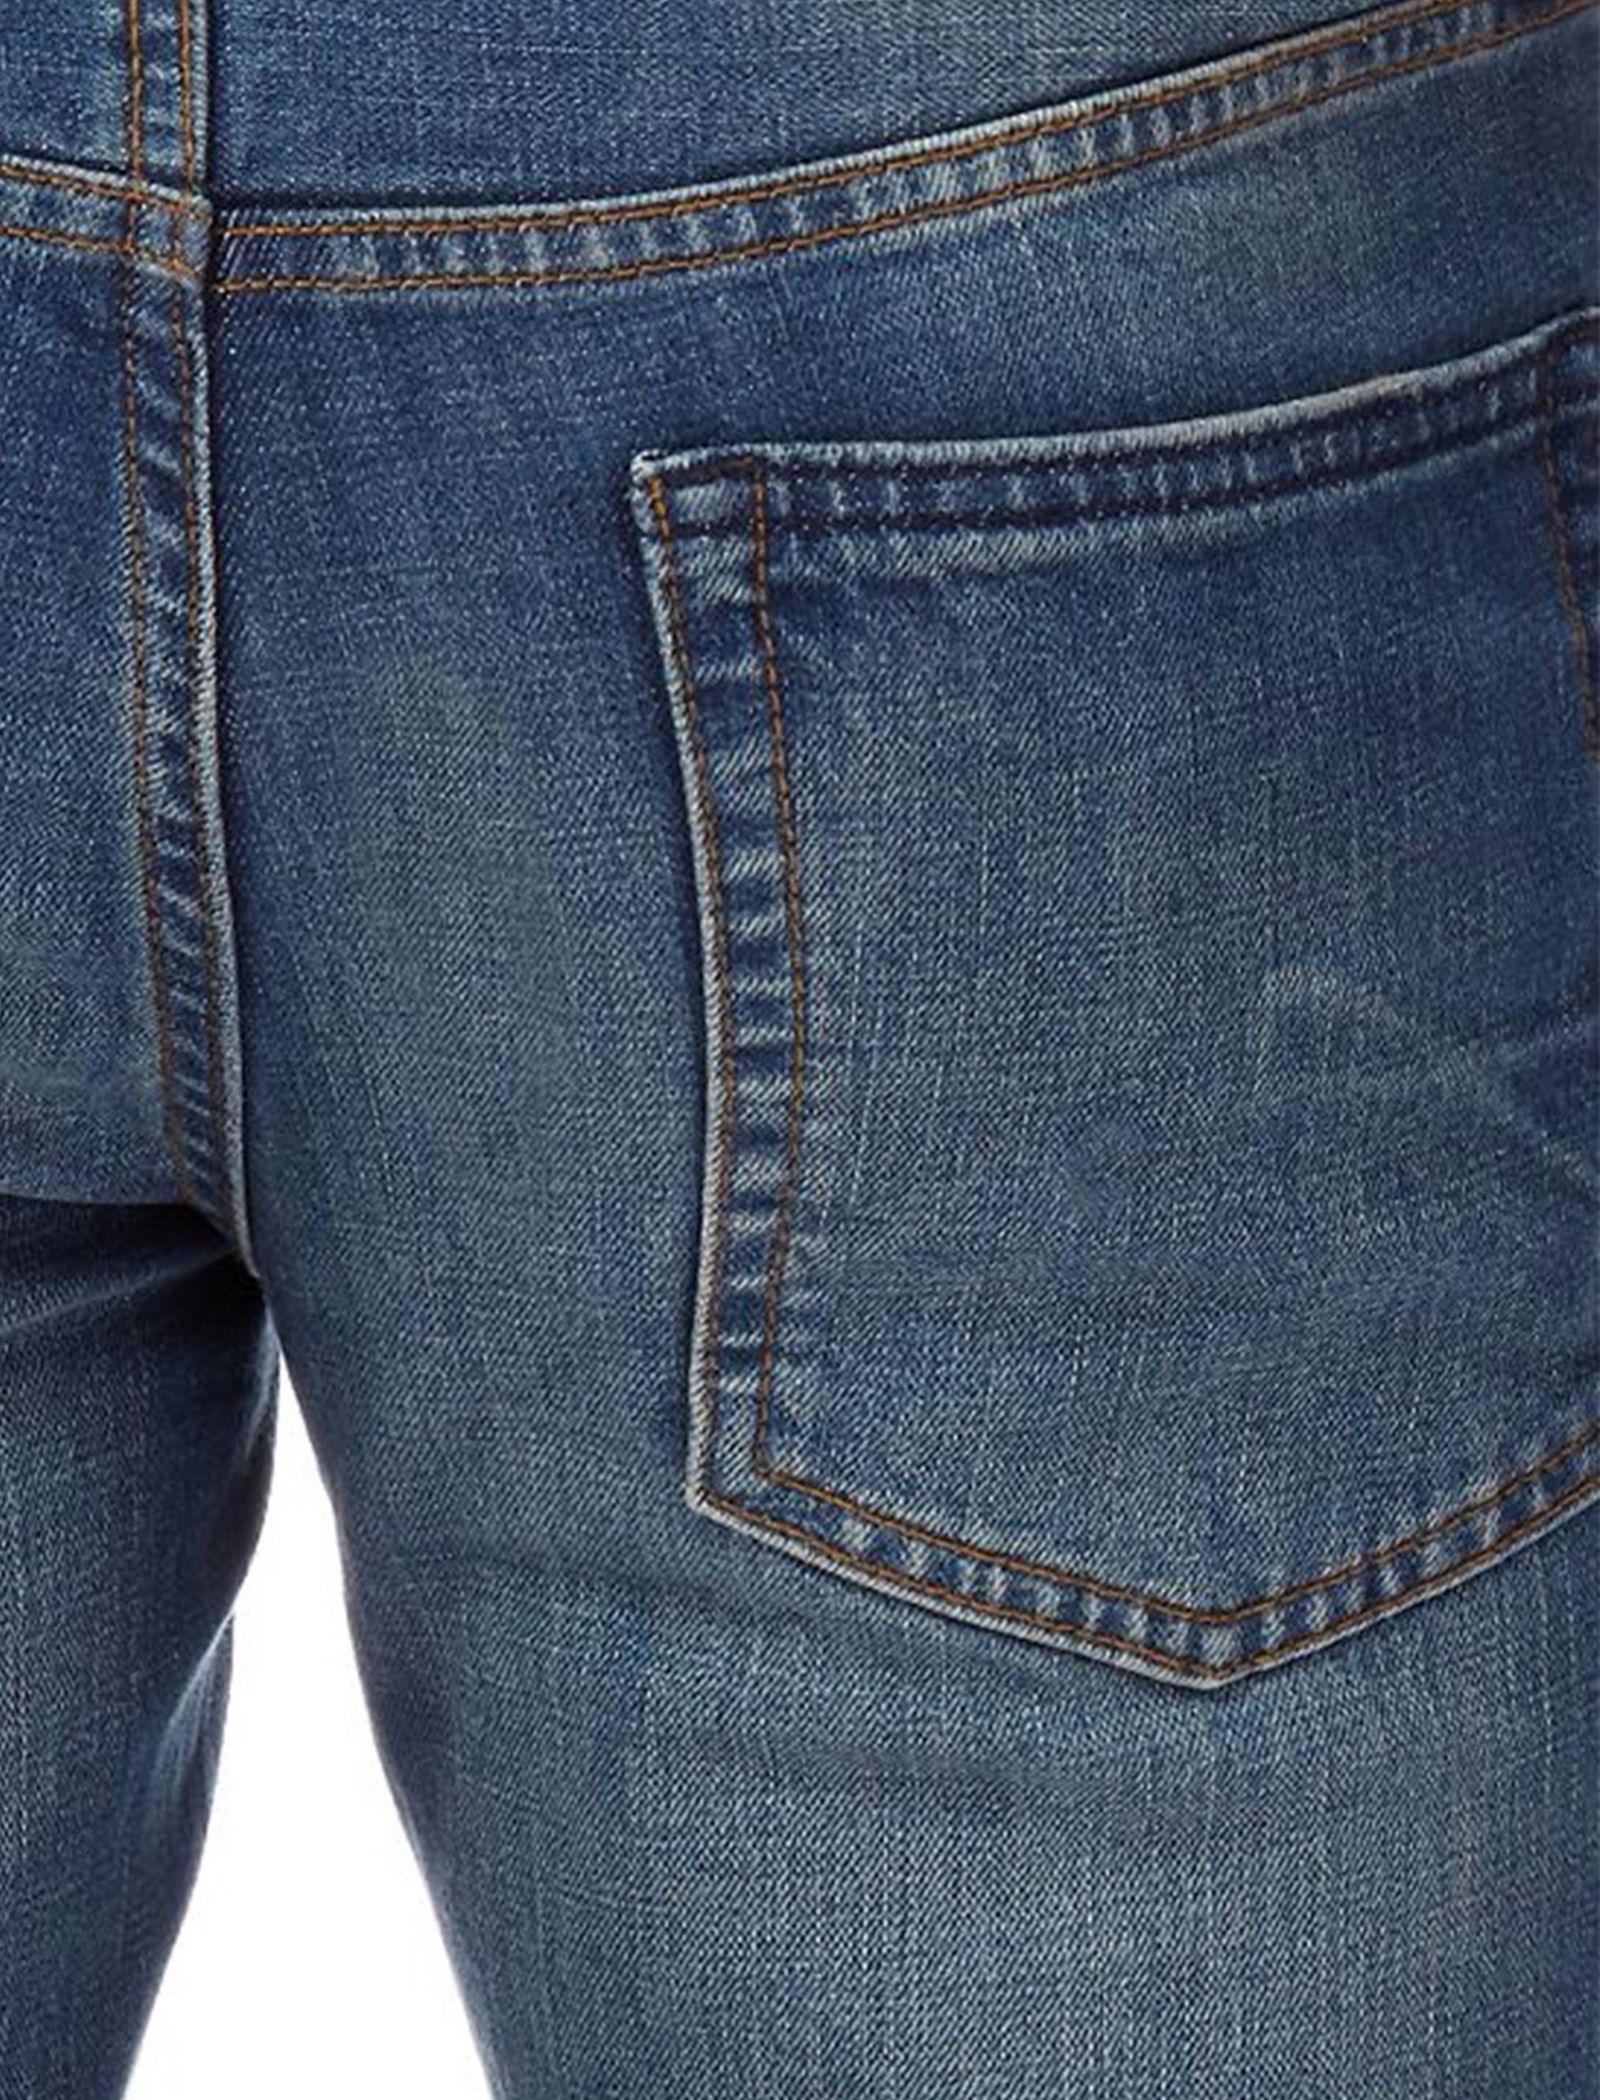 شلوار جین راسته مردانه - رد هرینگ - آبي - 5